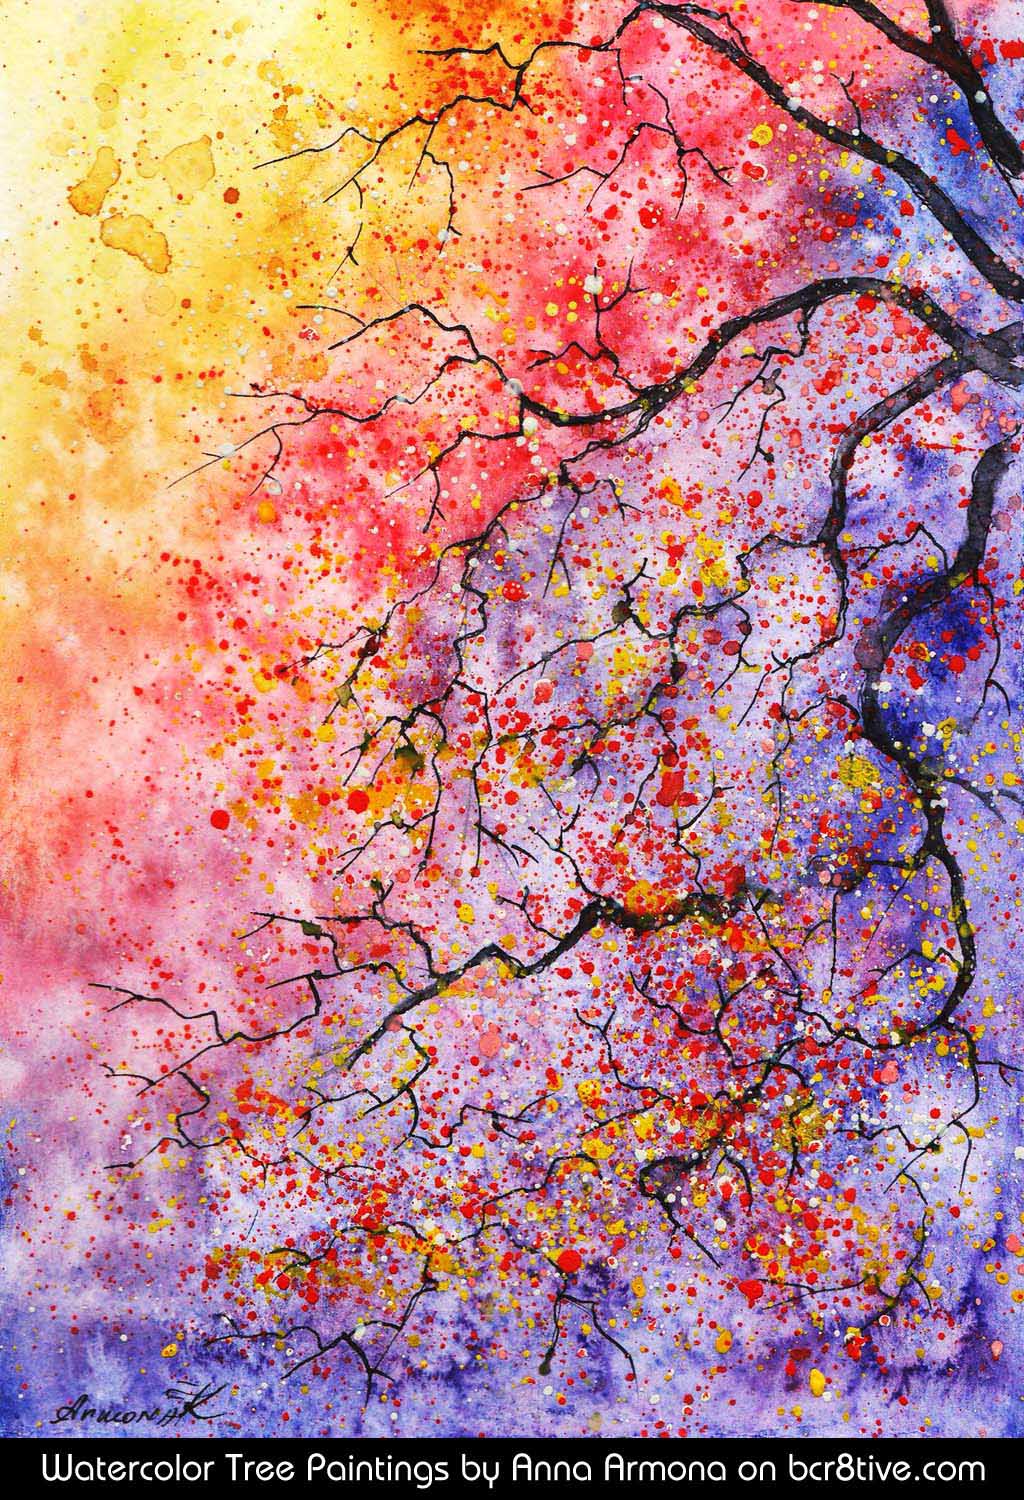 Anna Armona's Watercolor Trees